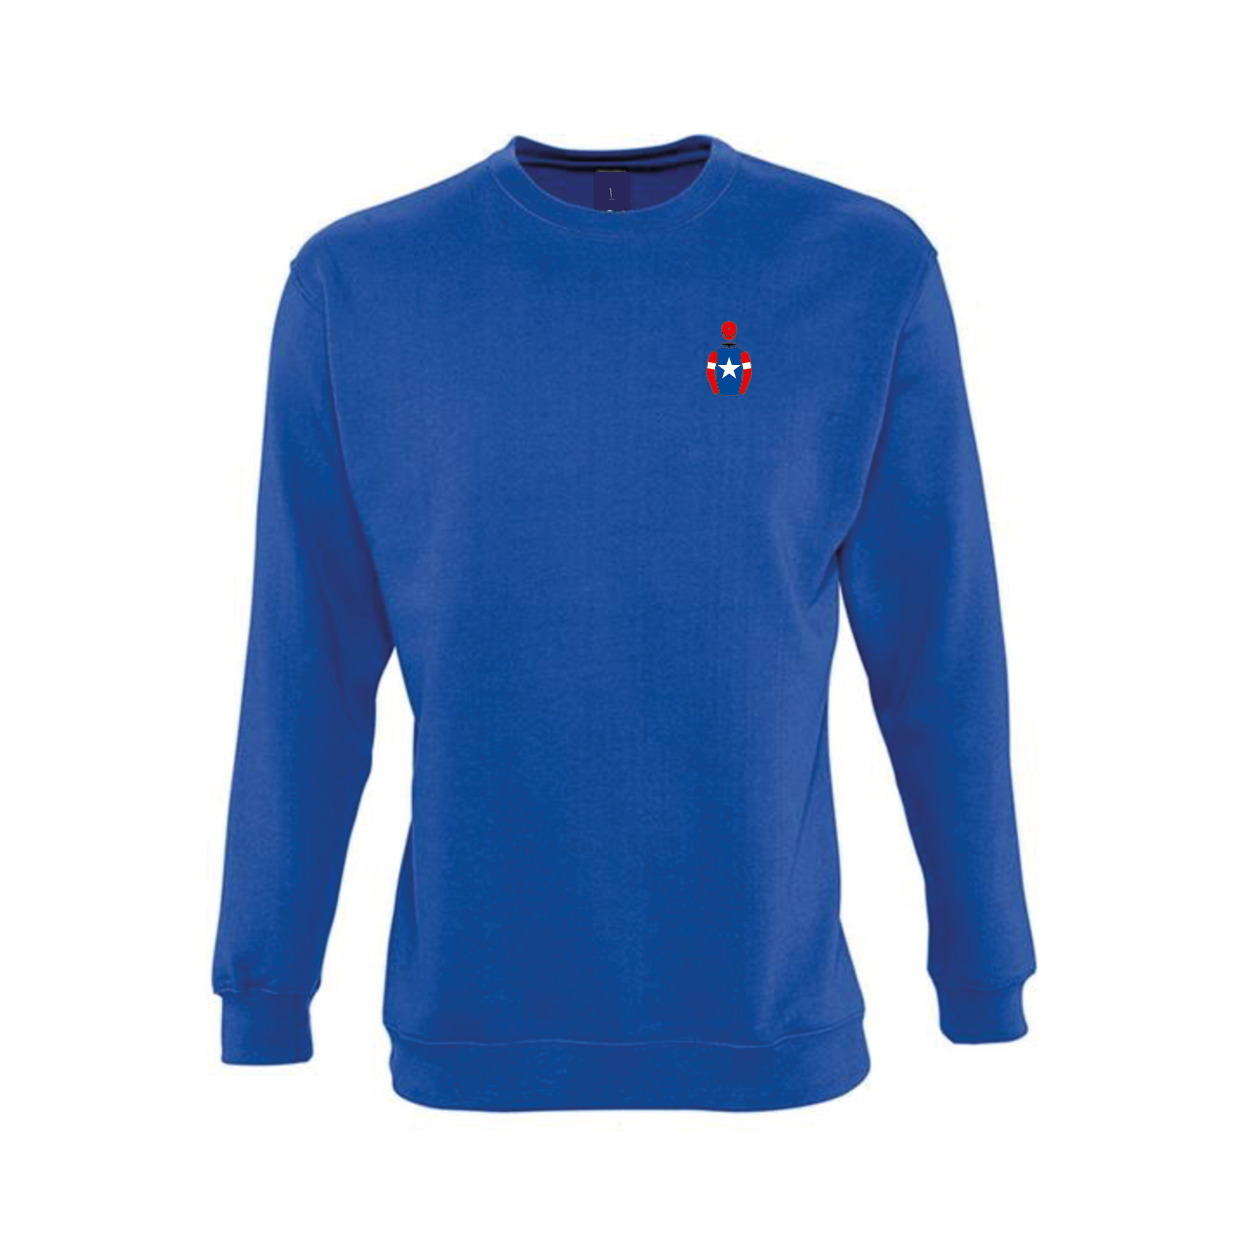 Unisex The Racing Emporium Embroidered Sweatshirt - Clothing - Hacked Up